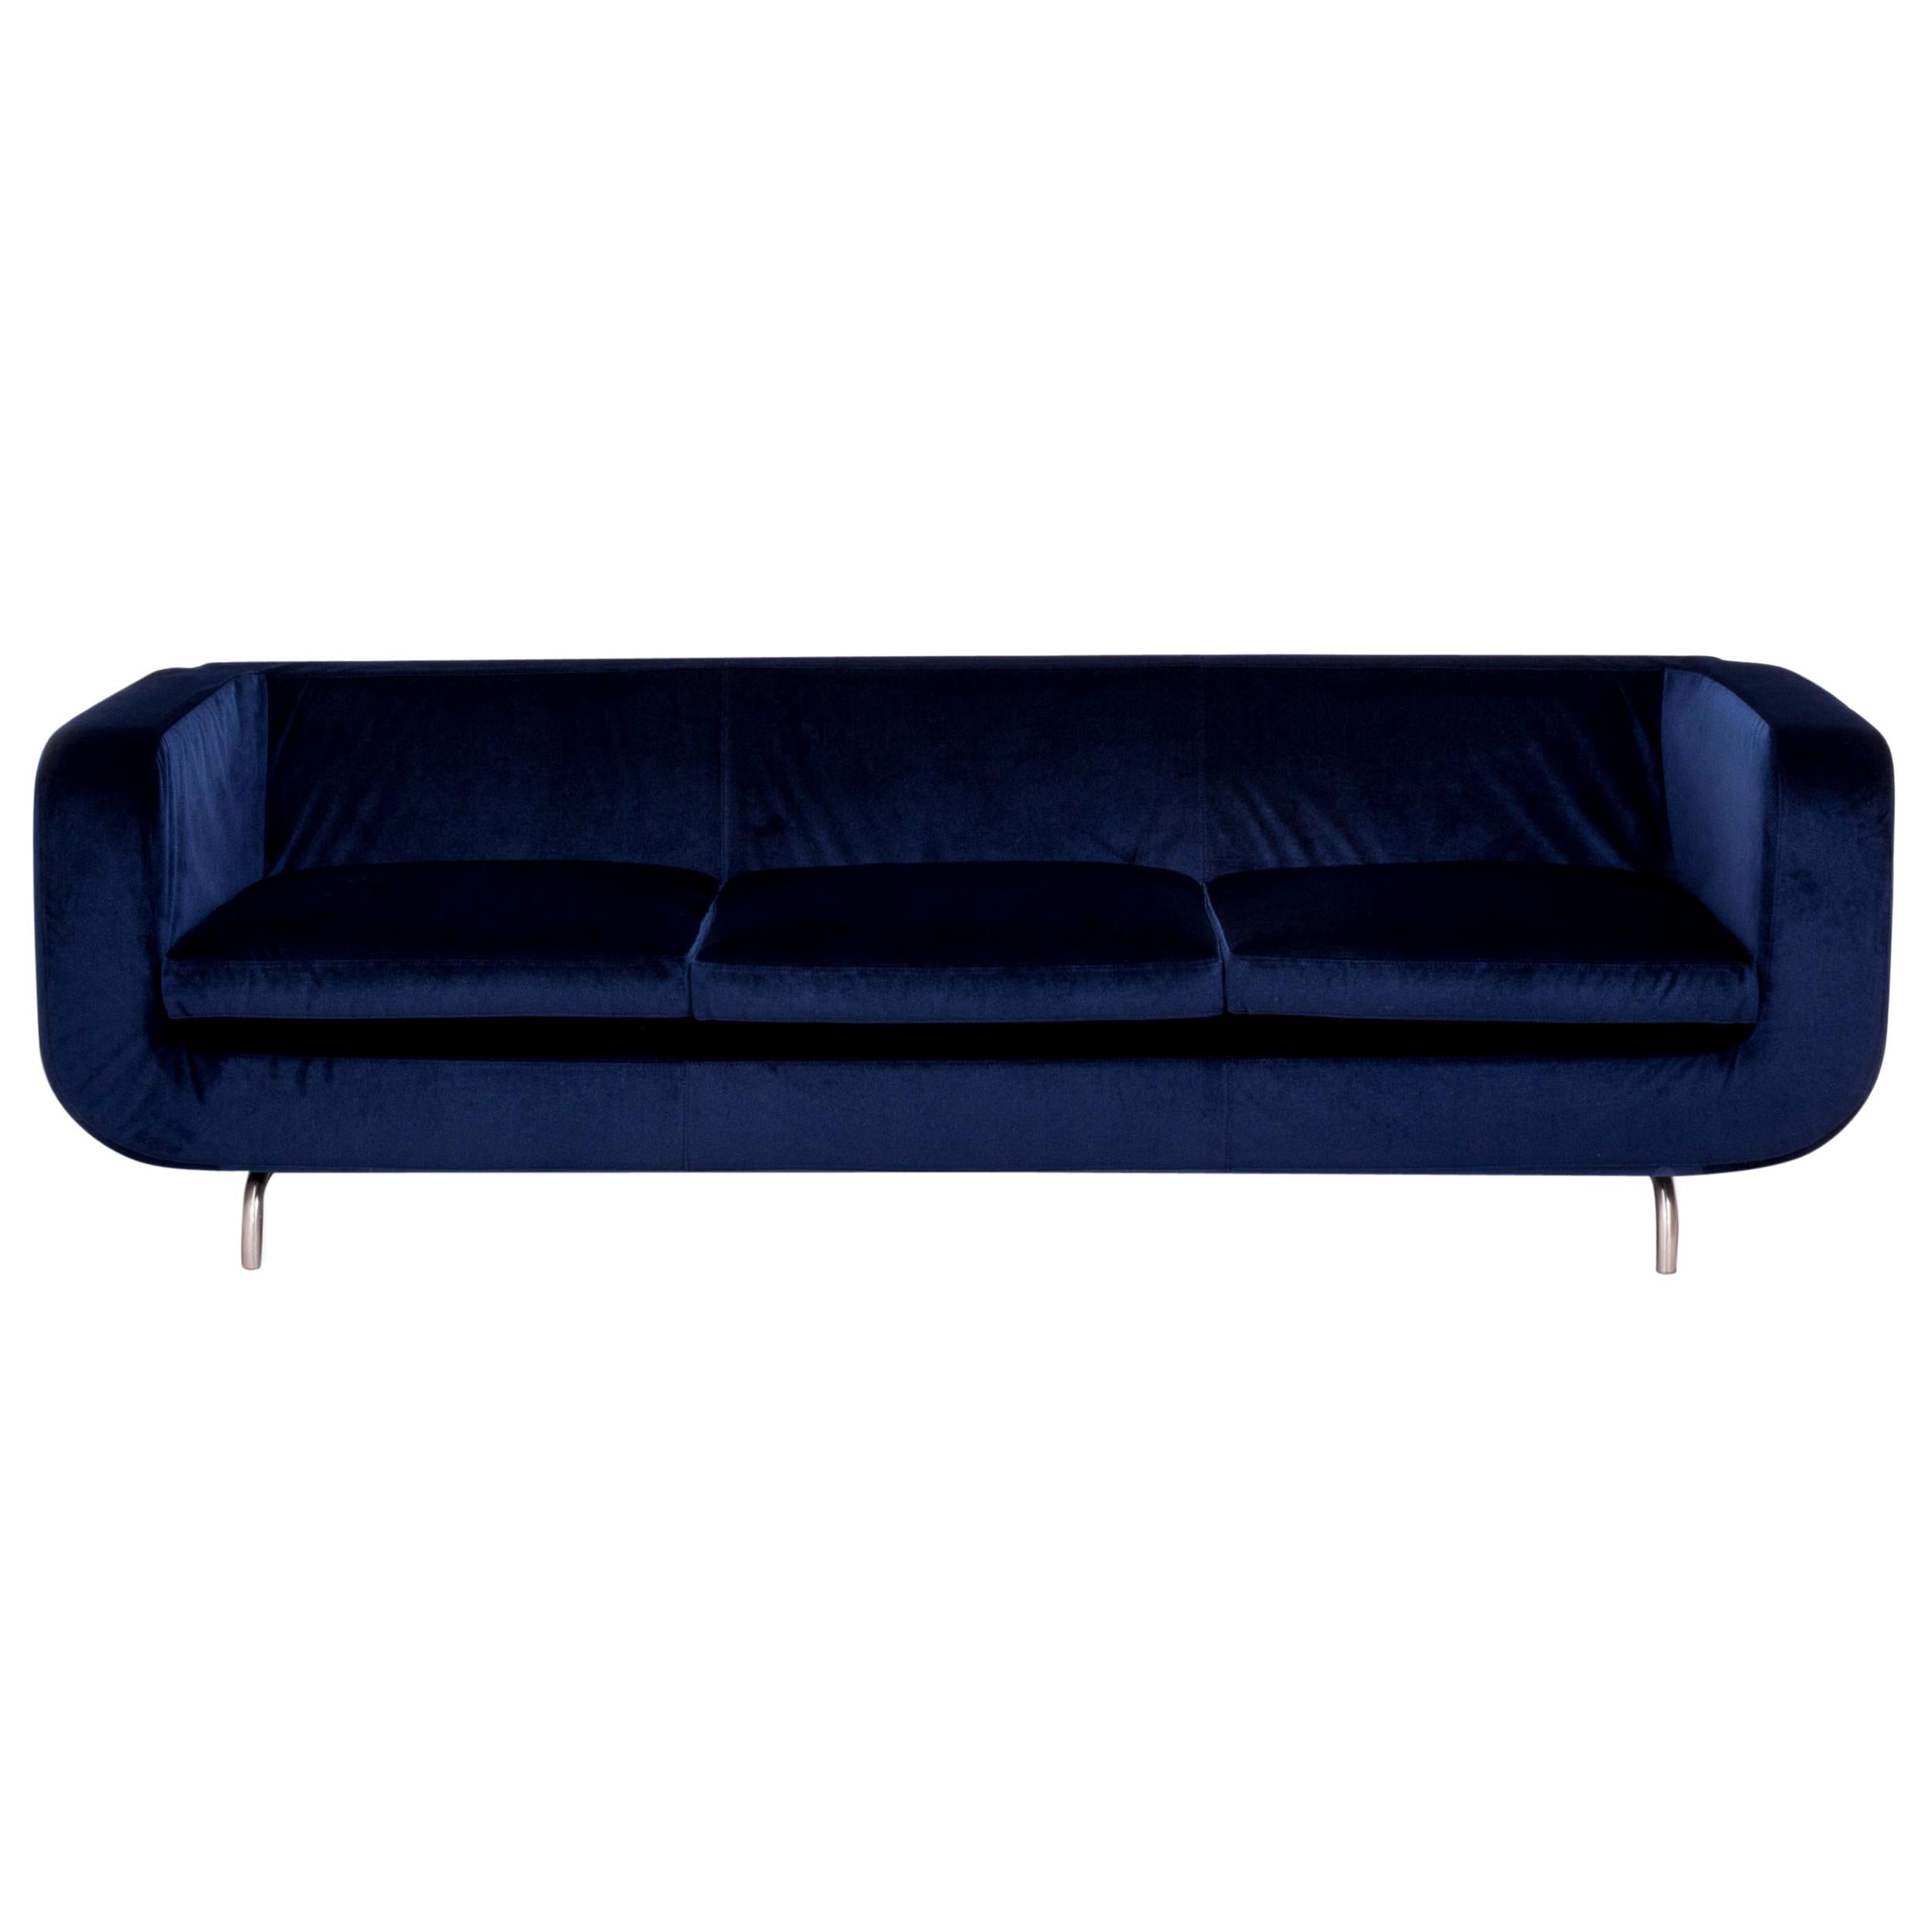 Dubuffet Three-Seat Sofa by Rodolfo Dordoni for Minotti in Deep Blue Velvet